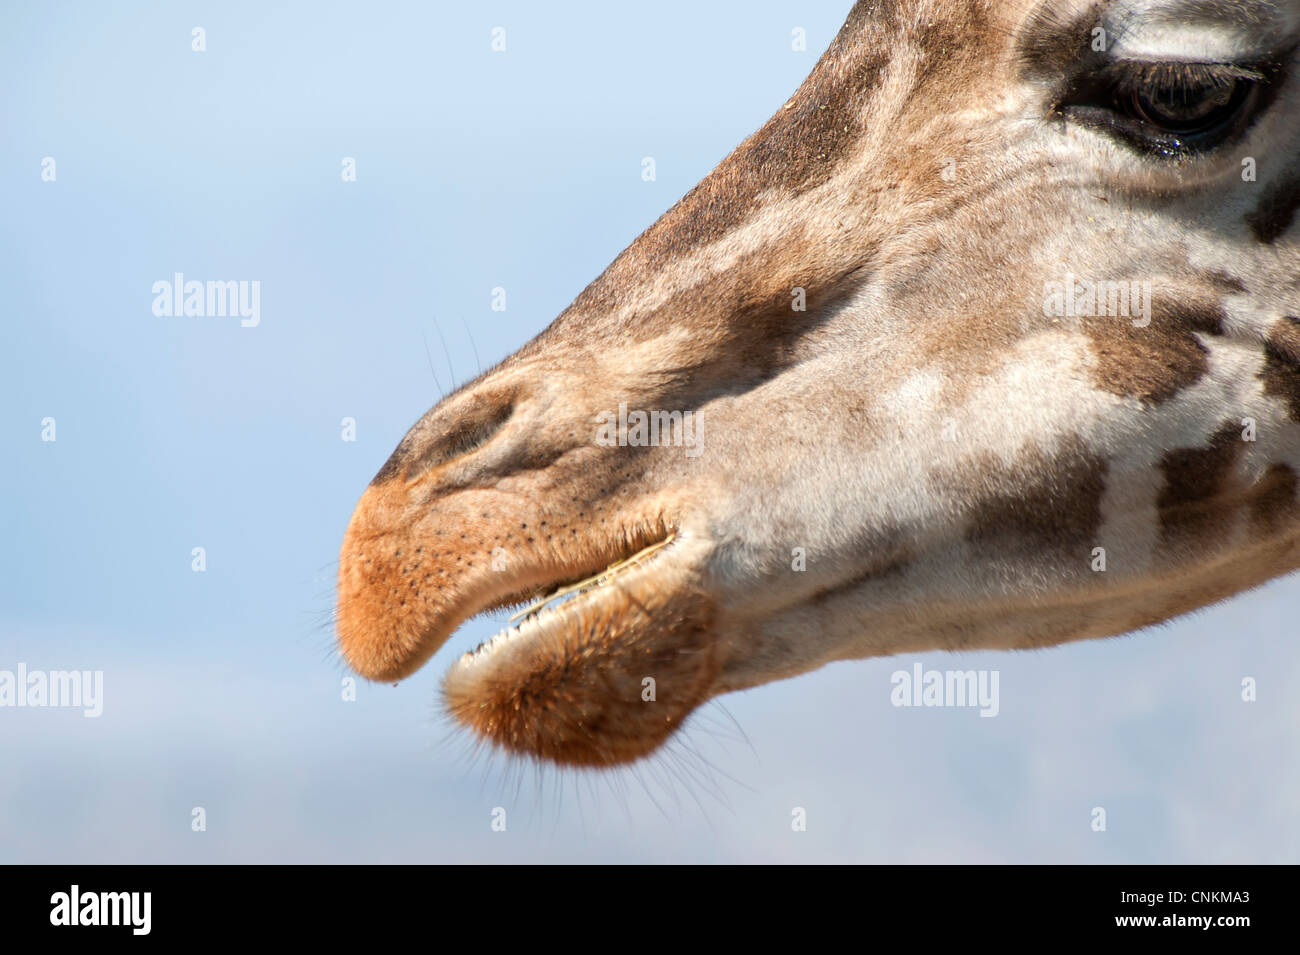 Close up of a Giraffe eating Stock Photo